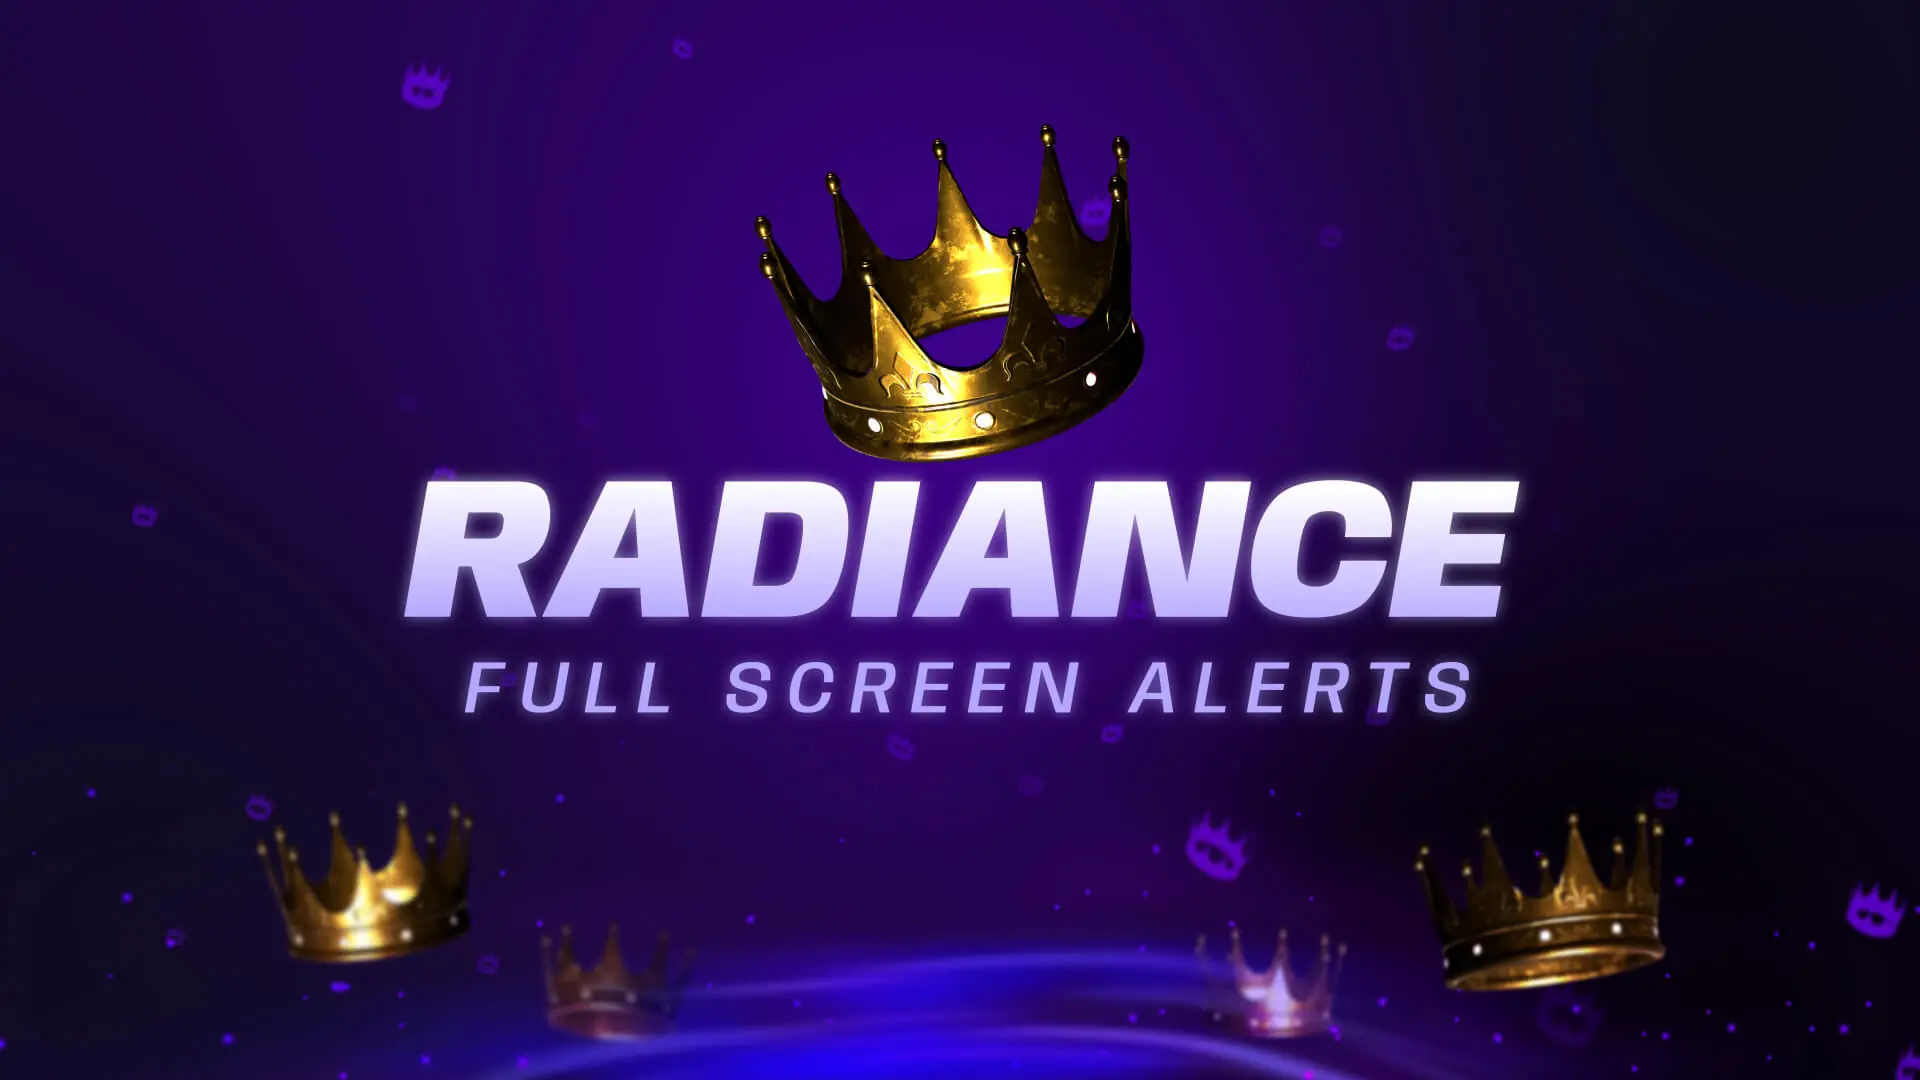 Radiance - Full Screen Alerts - Main Image